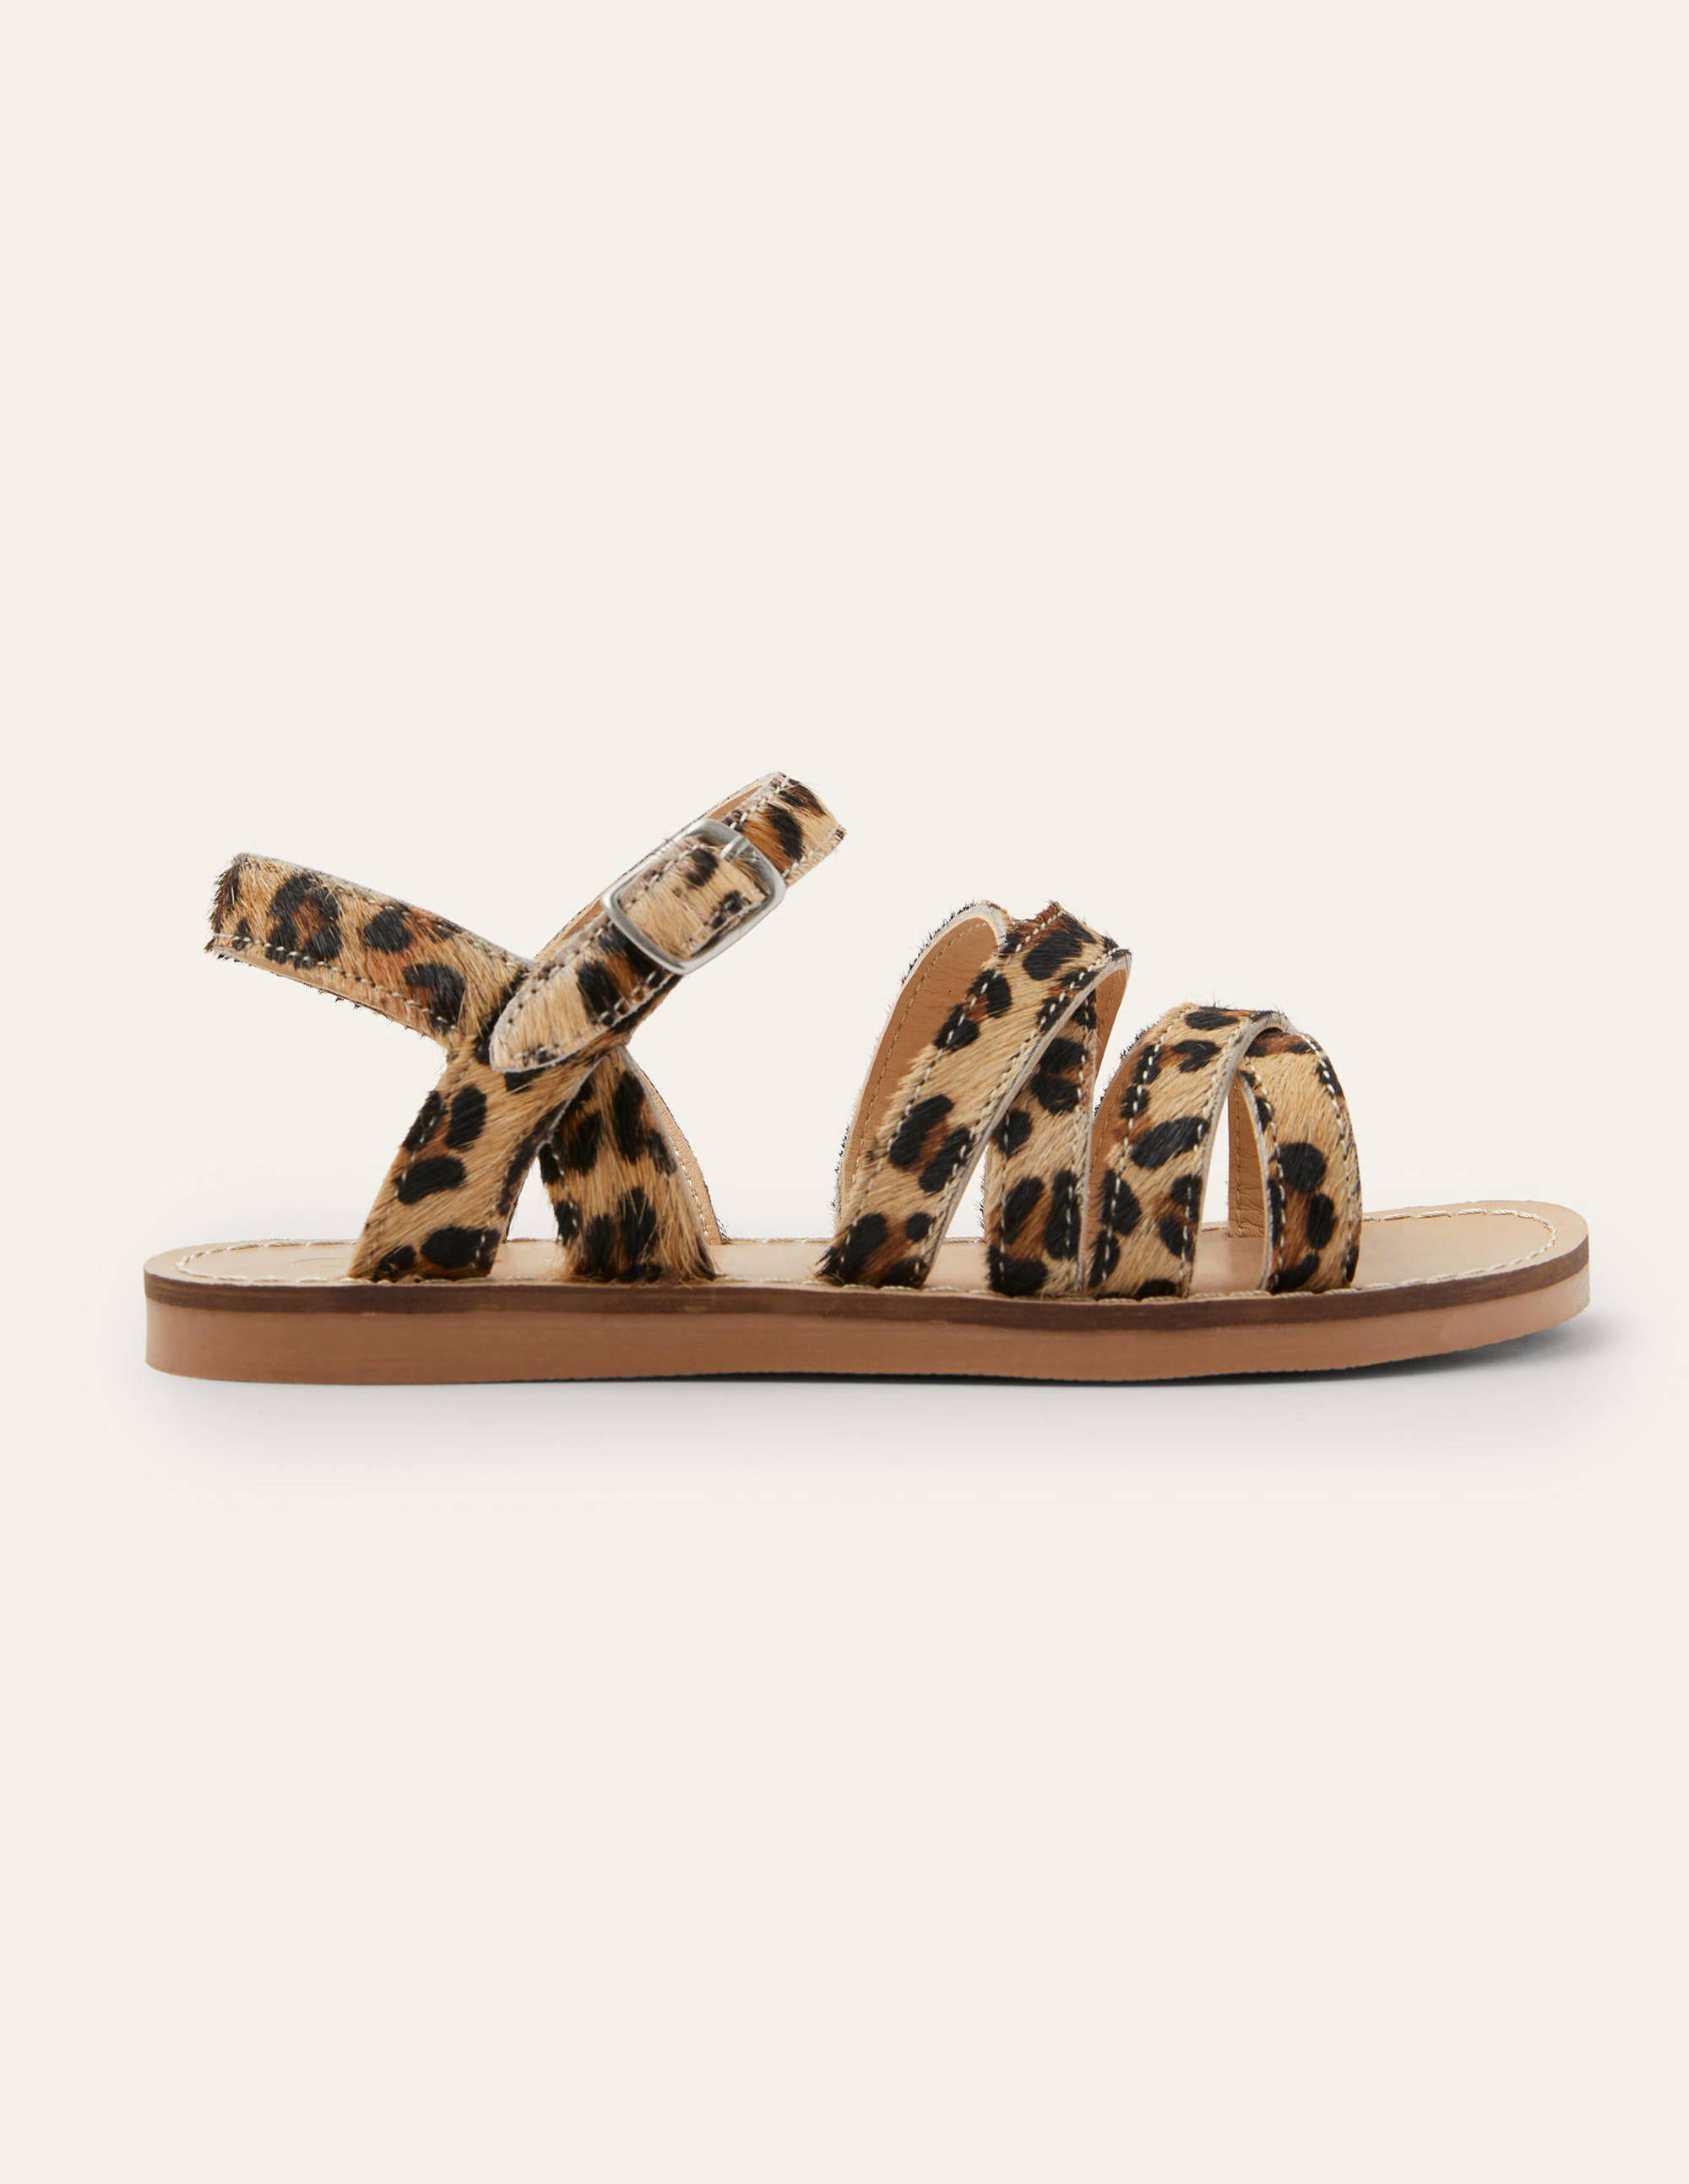 Everyday Sandals - Leopard | Boden UK